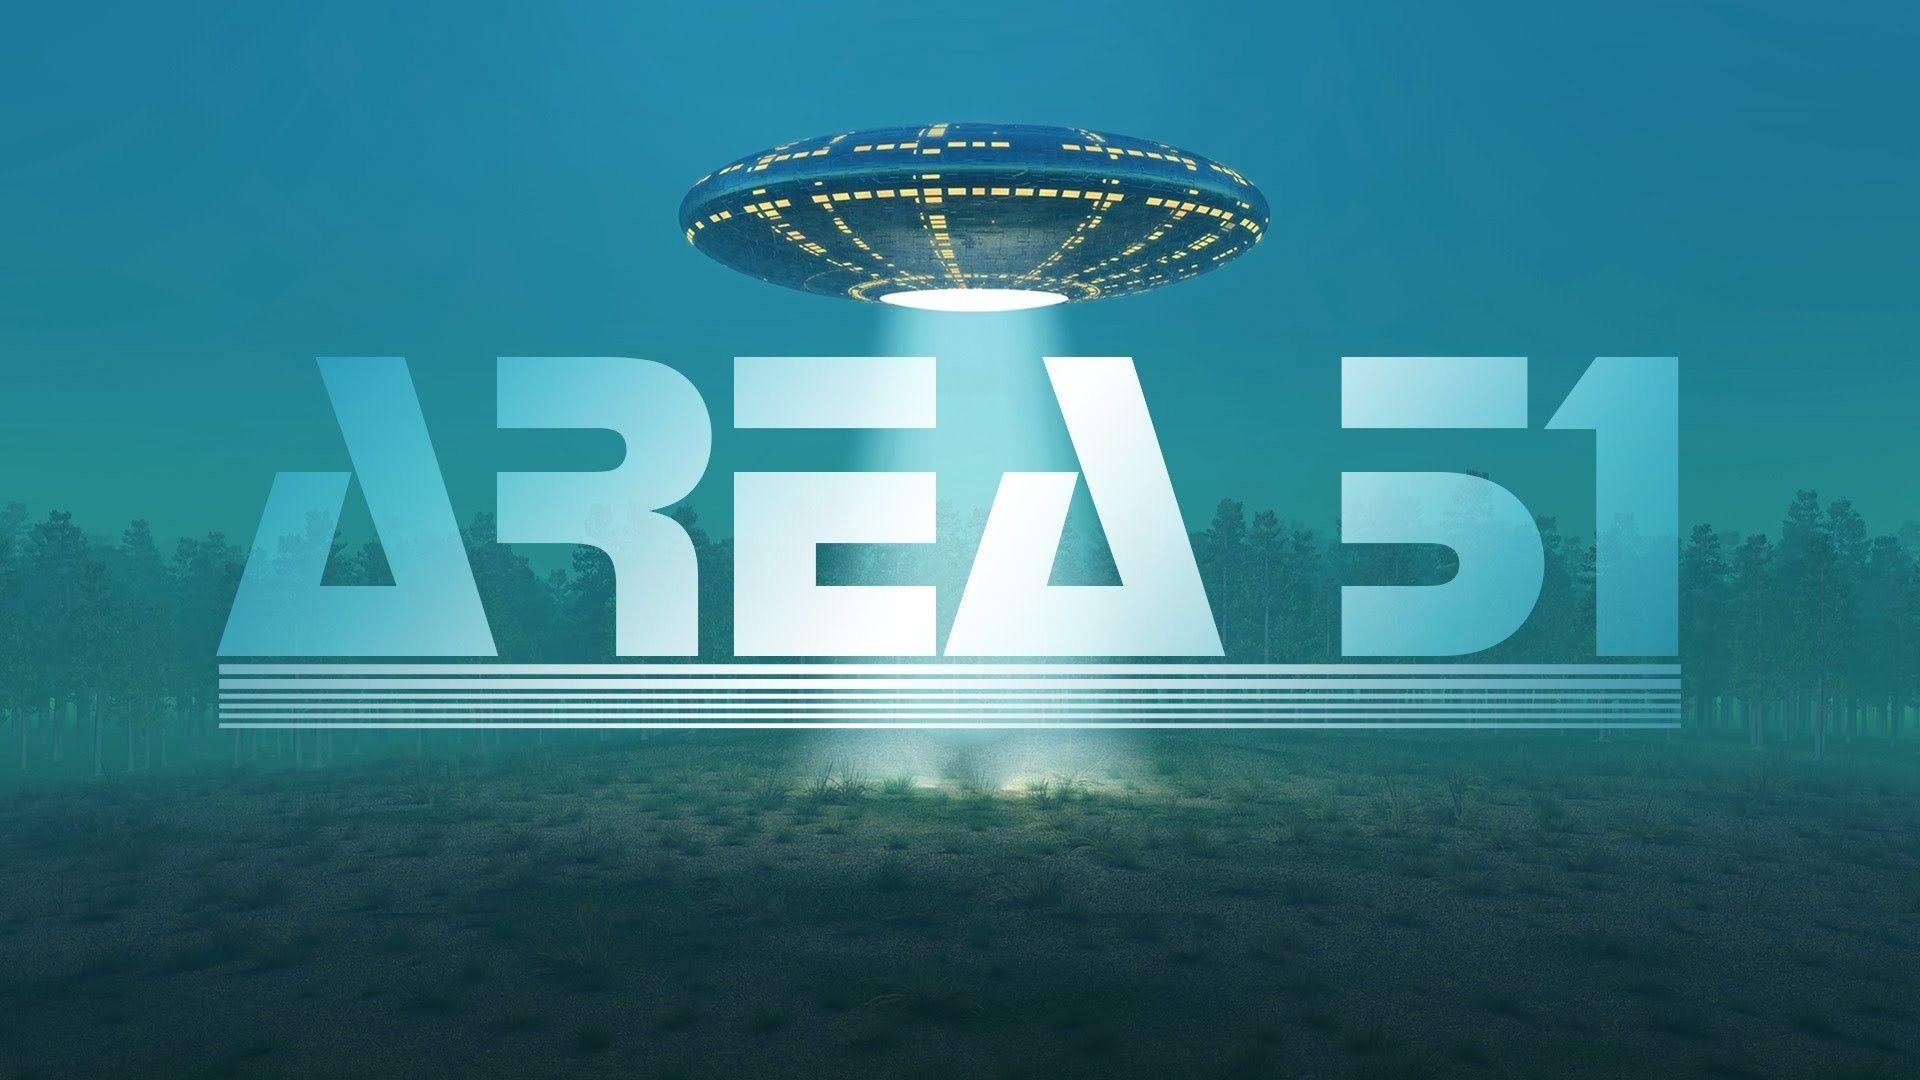 Area 51 Wallpaper